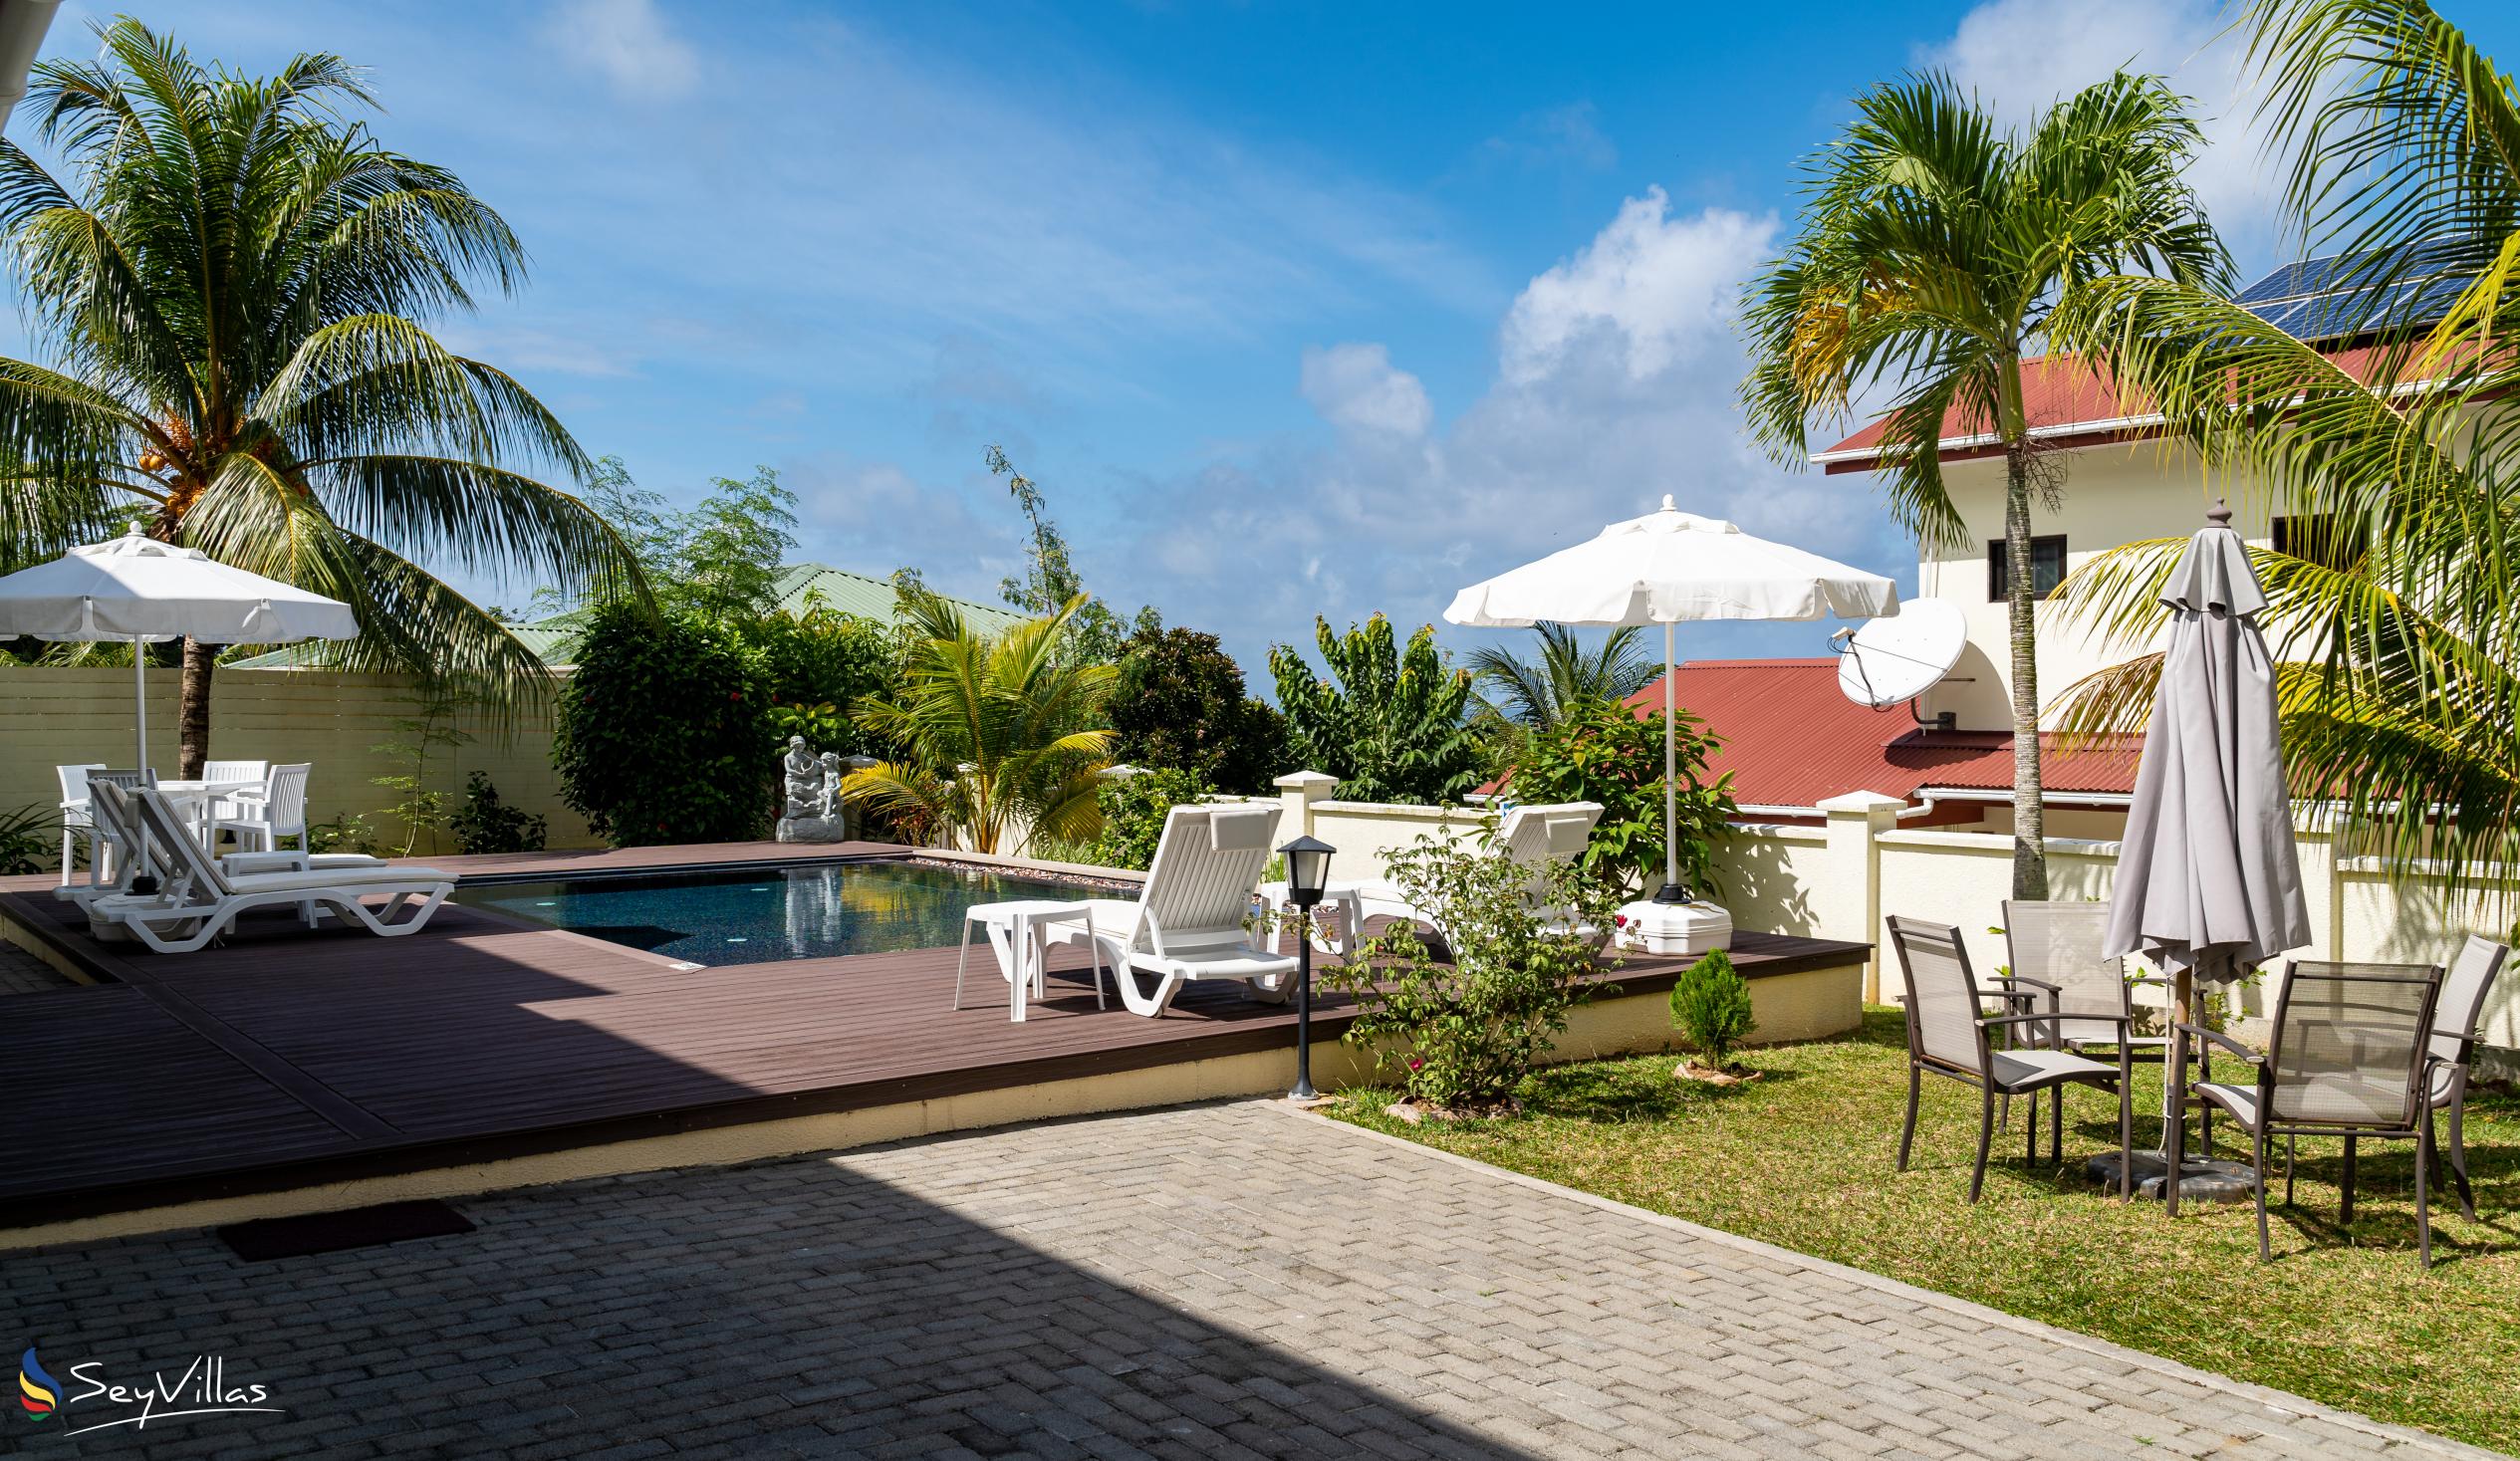 Foto 11: Emma's Guest House and Self-Catering - Aussenbereich - Mahé (Seychellen)